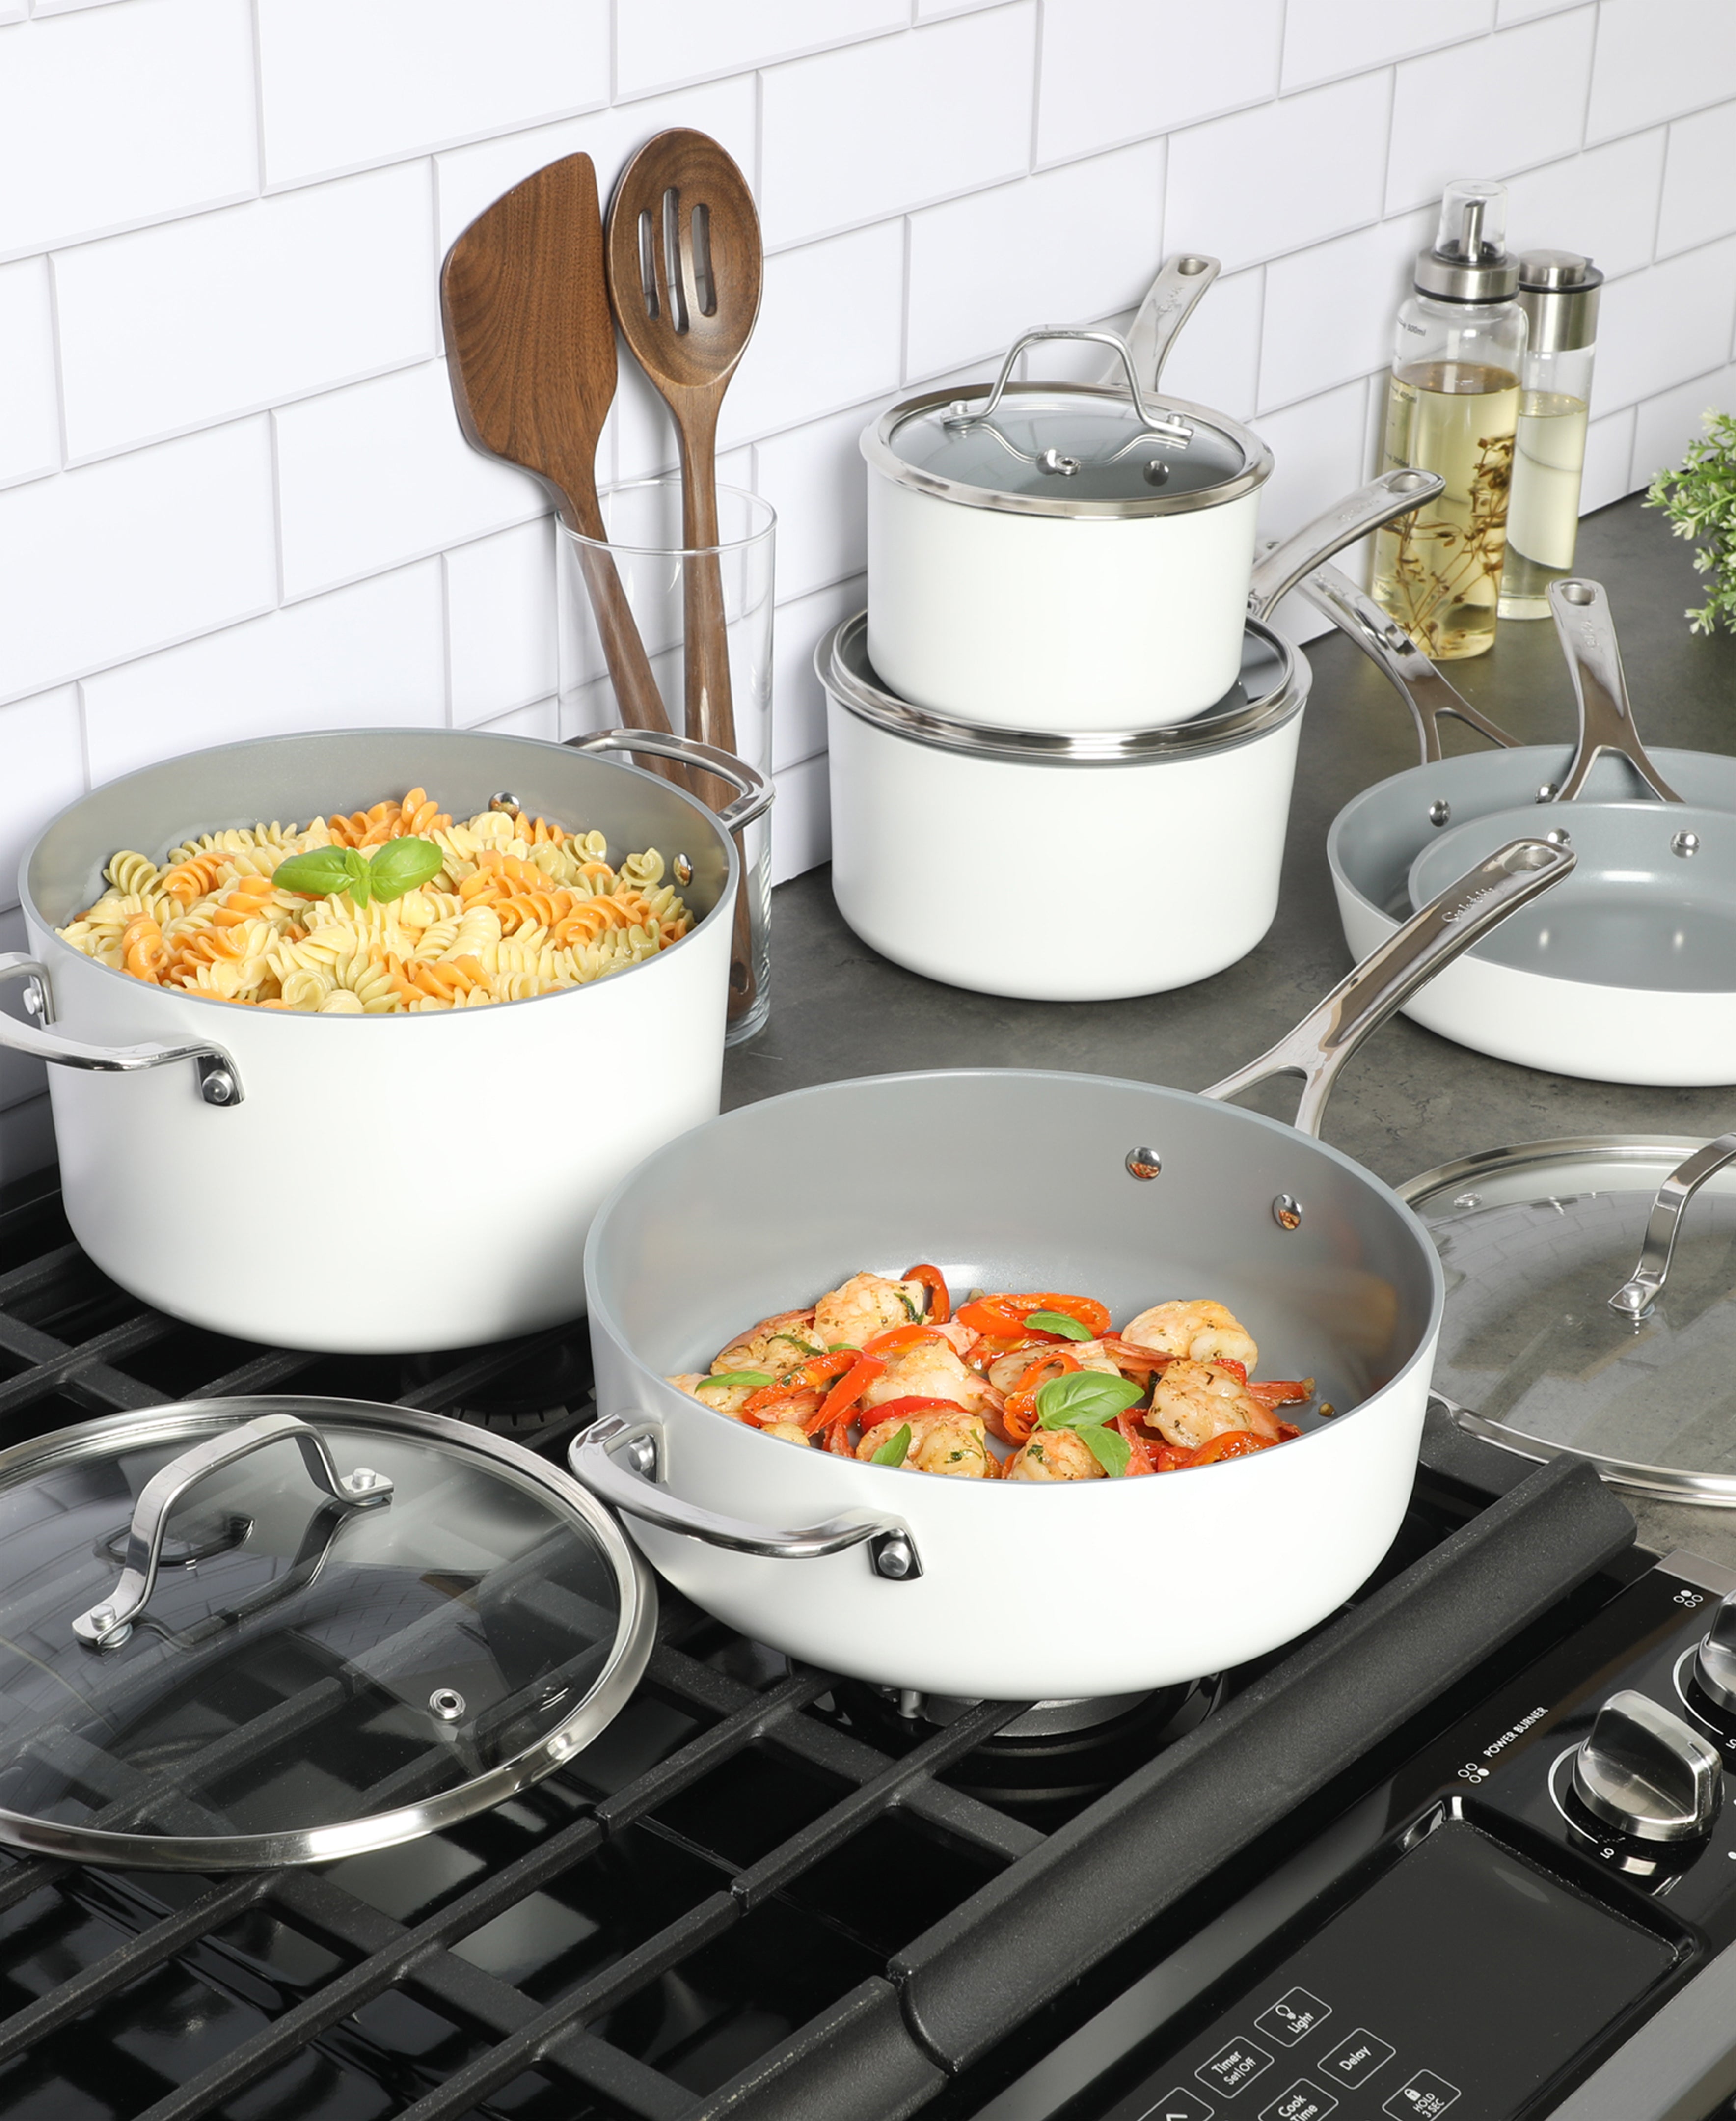 Cuisinart Matte White Stainless Steel 11-Piece Cookware Set